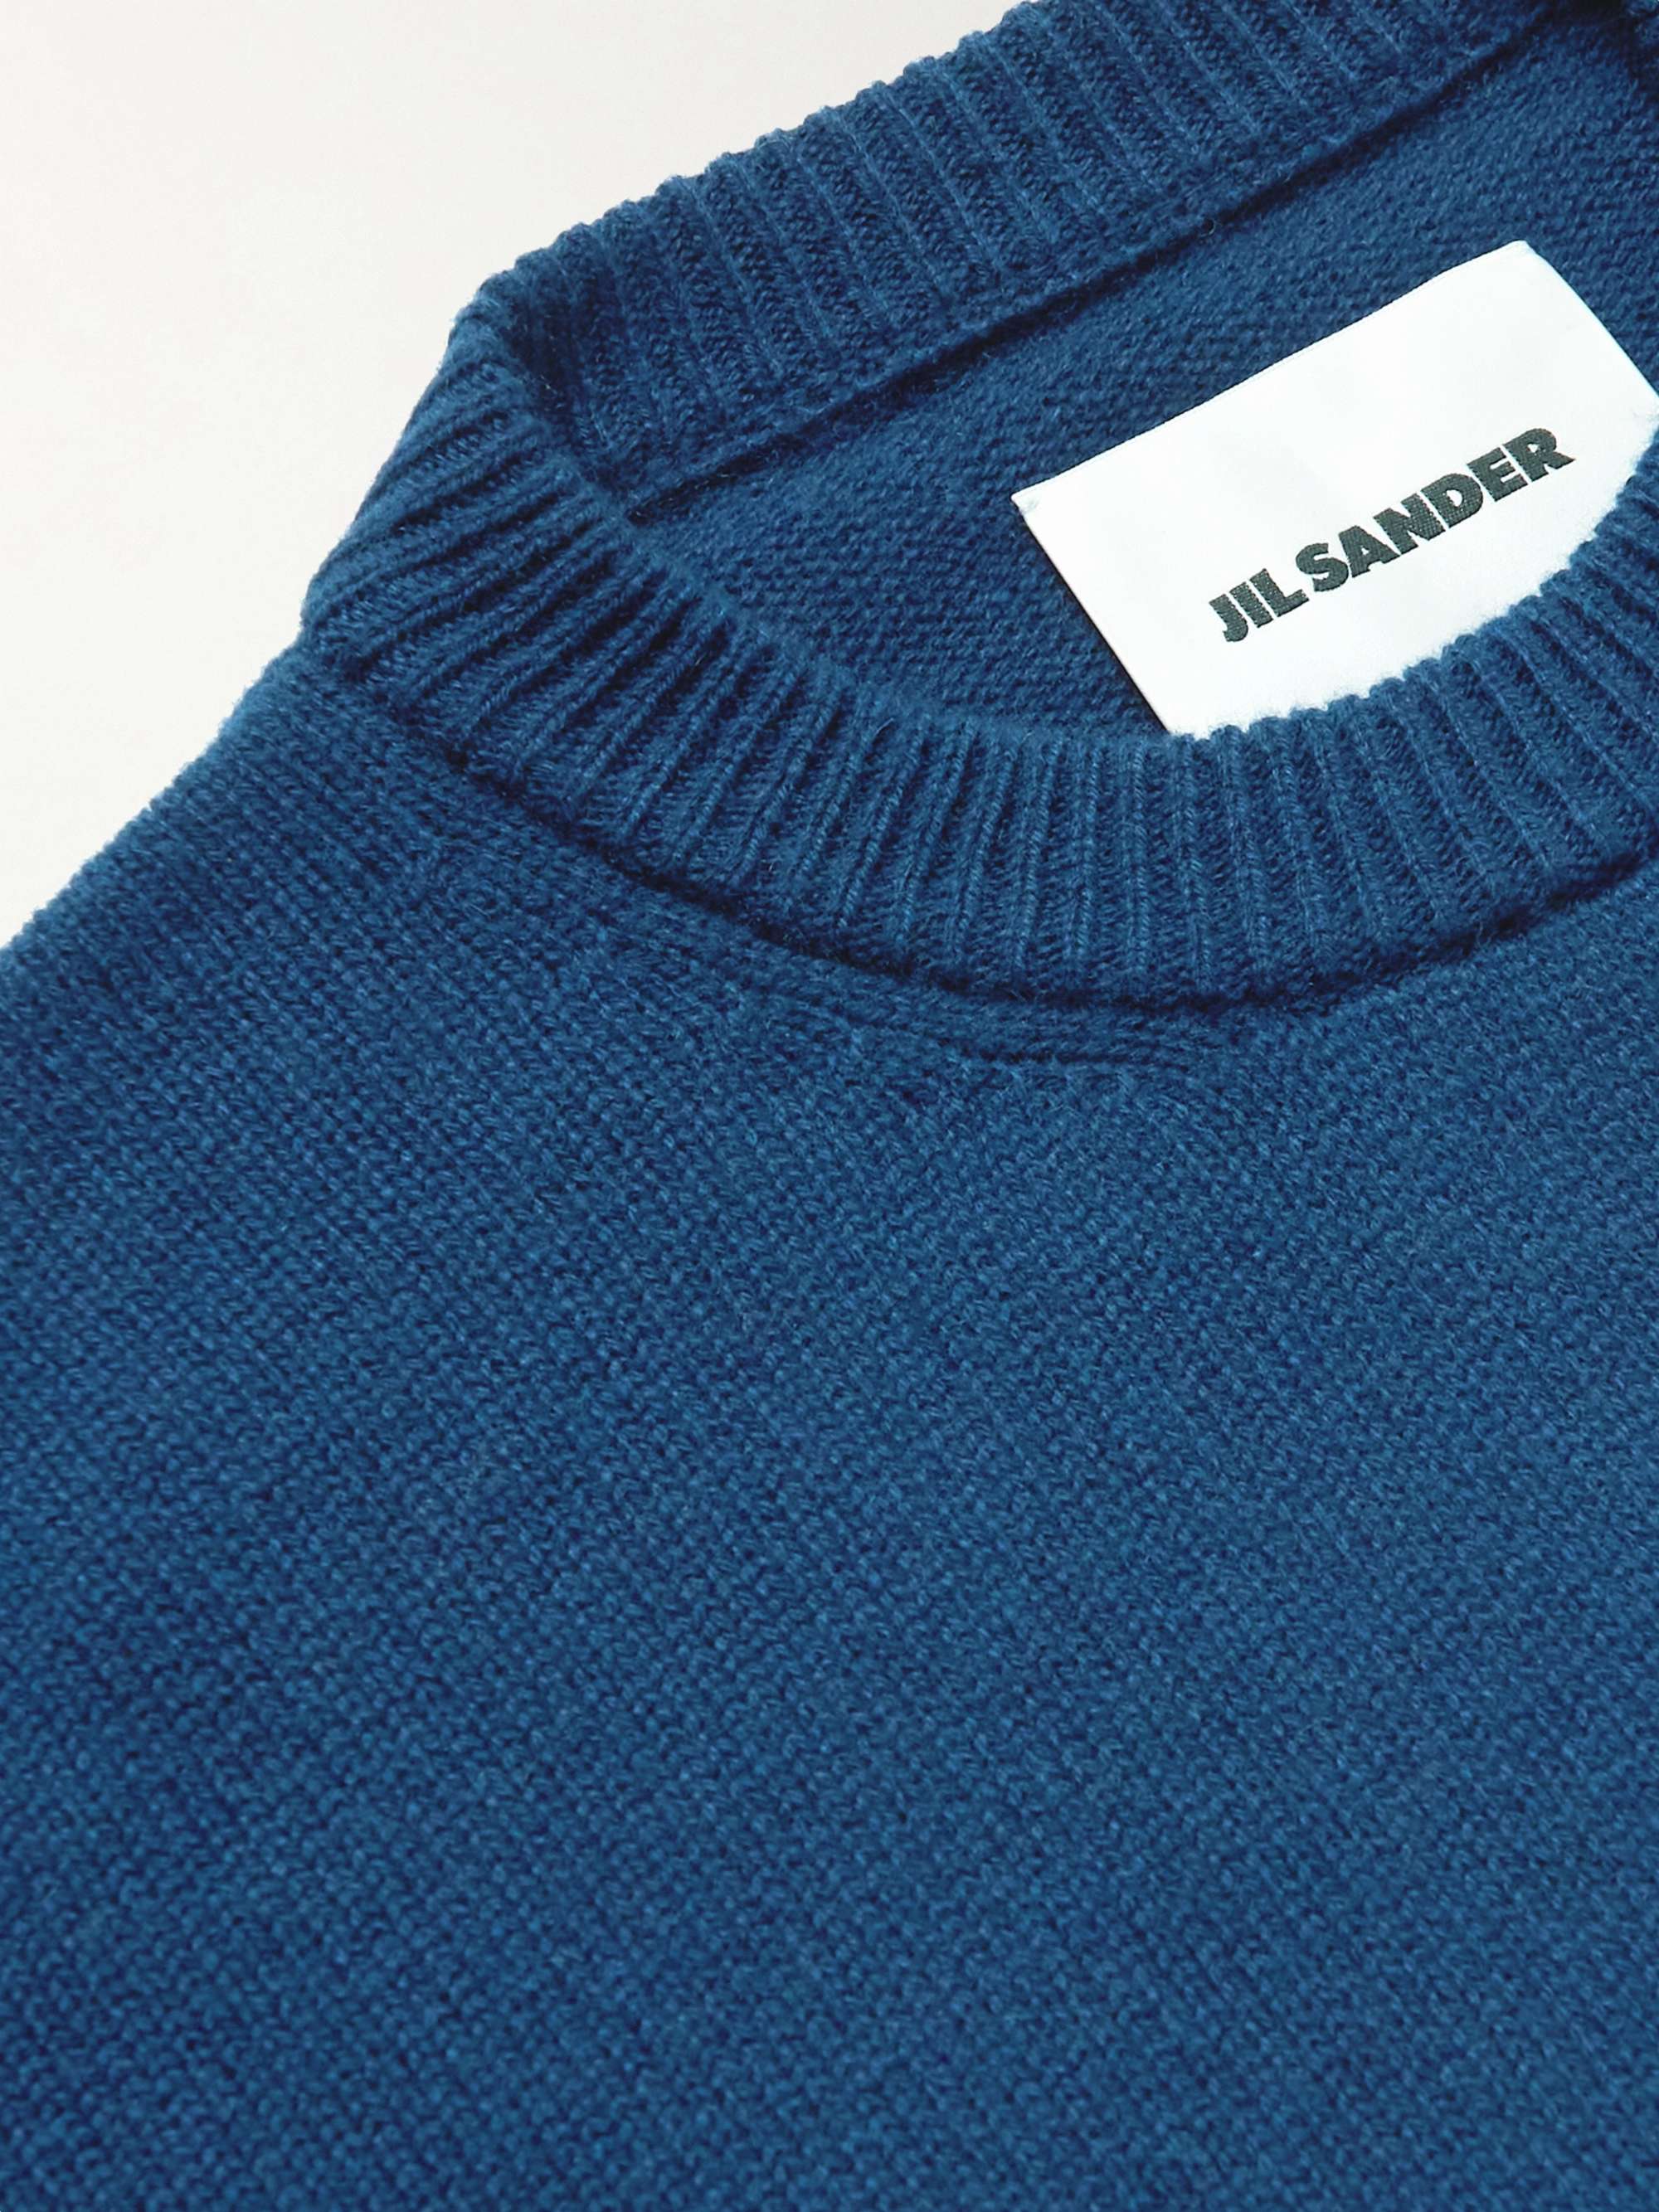 JIL SANDER Cashmere Sweater